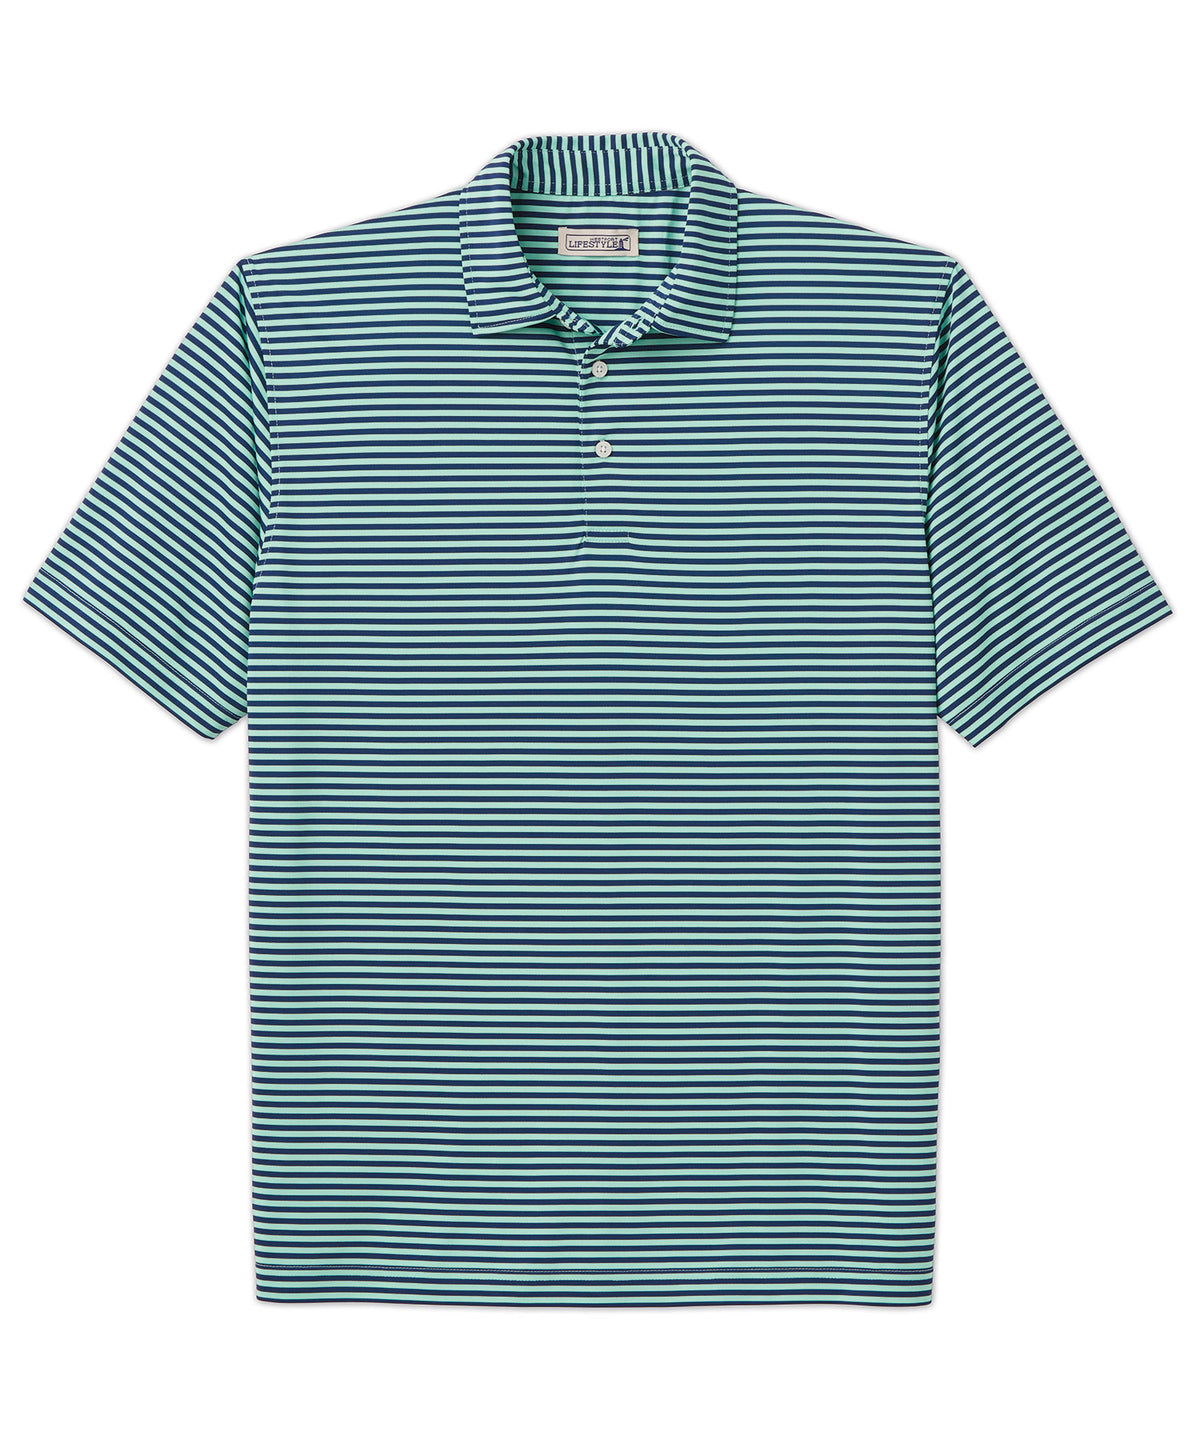 Westport Lifestyle Short Sleeve Performance Stripe Polo Shirt